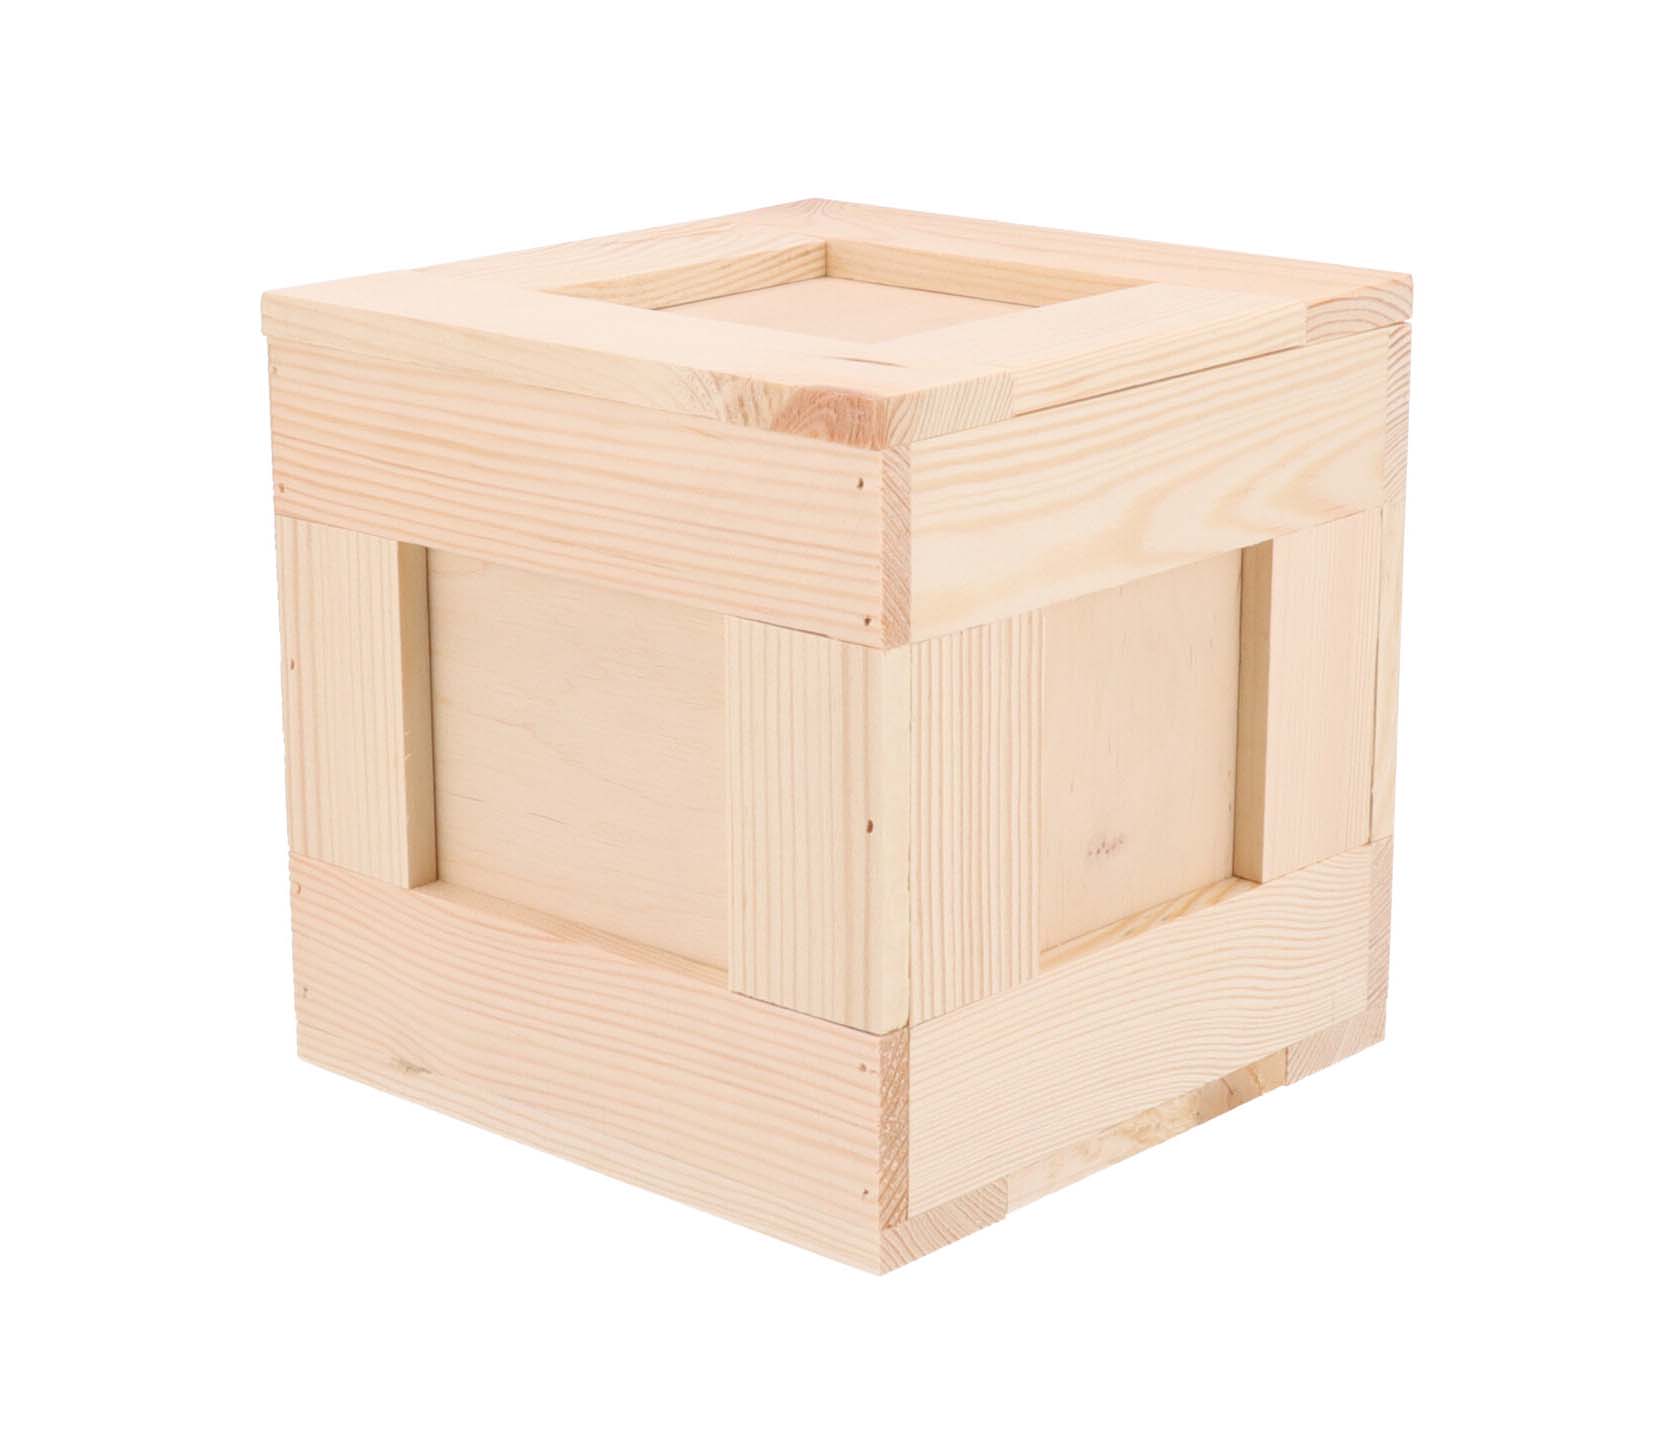 Dřevěný box 20 x 20 cm